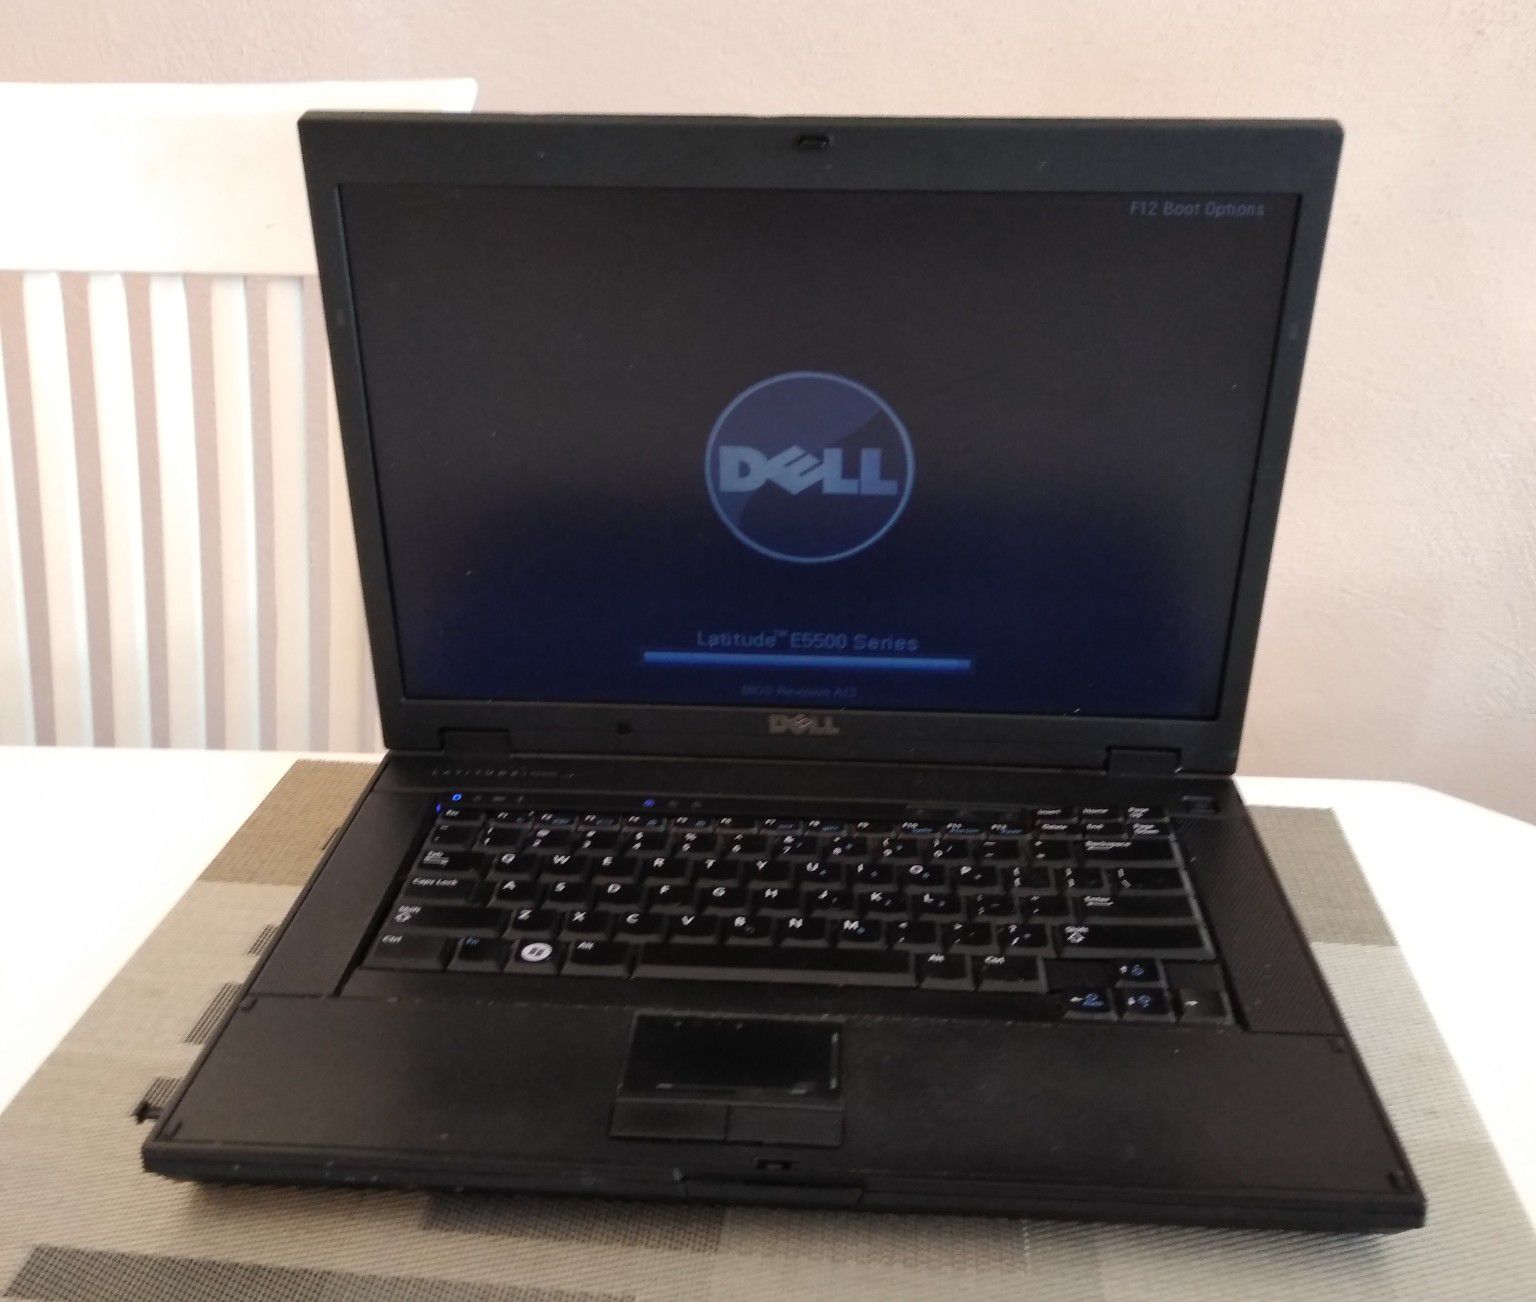 Dell latitude laptop with Windows 10